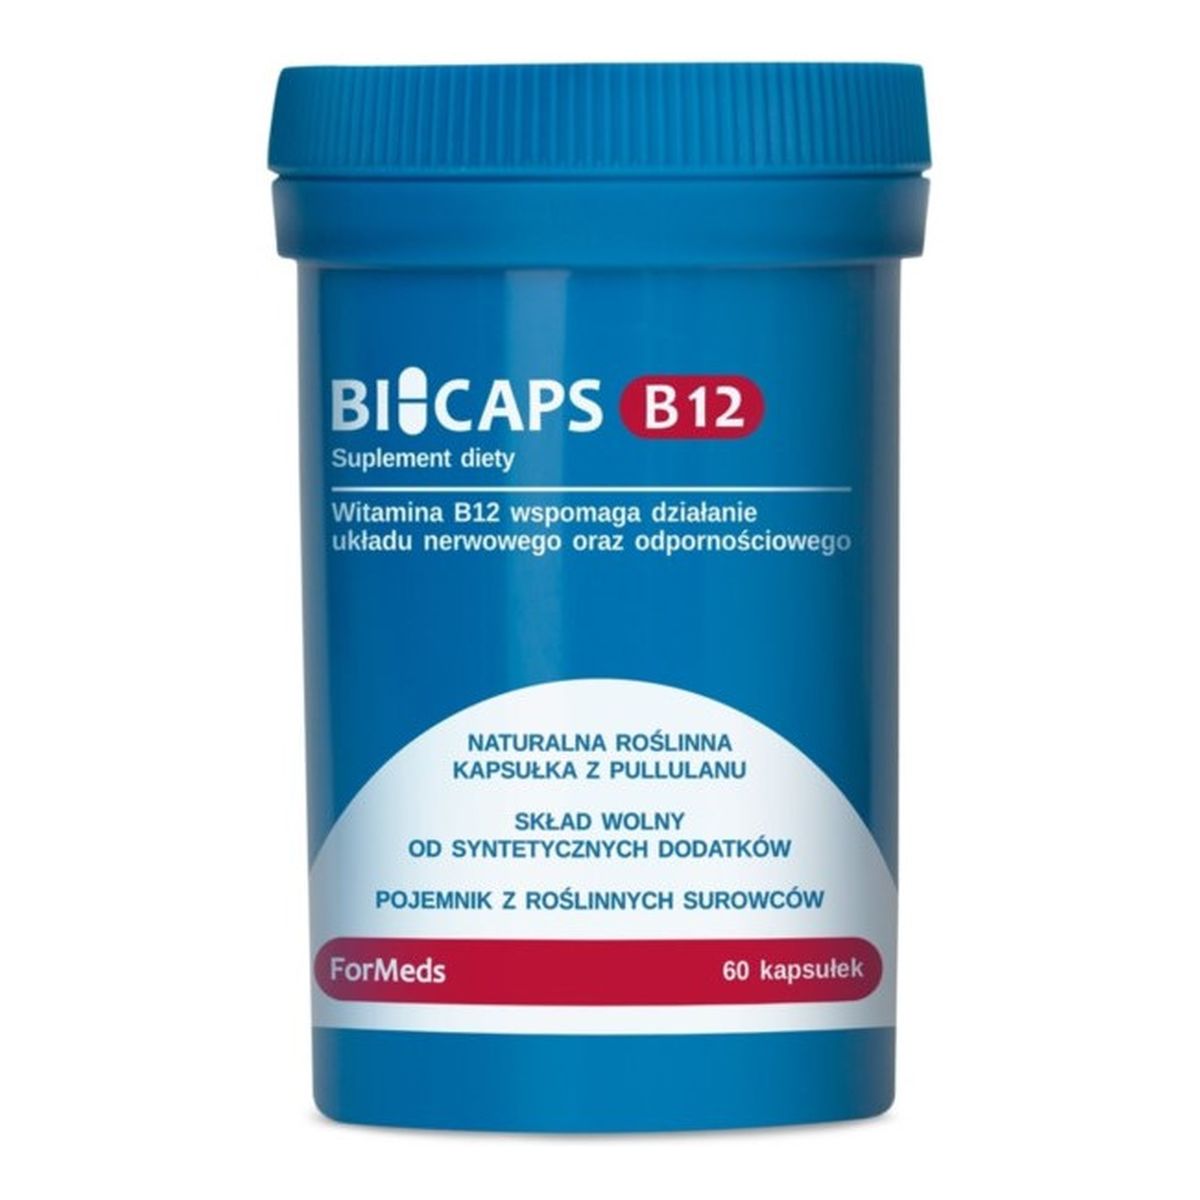 Formeds Bicaps witamina b12 suplement diety 60 kapsułek